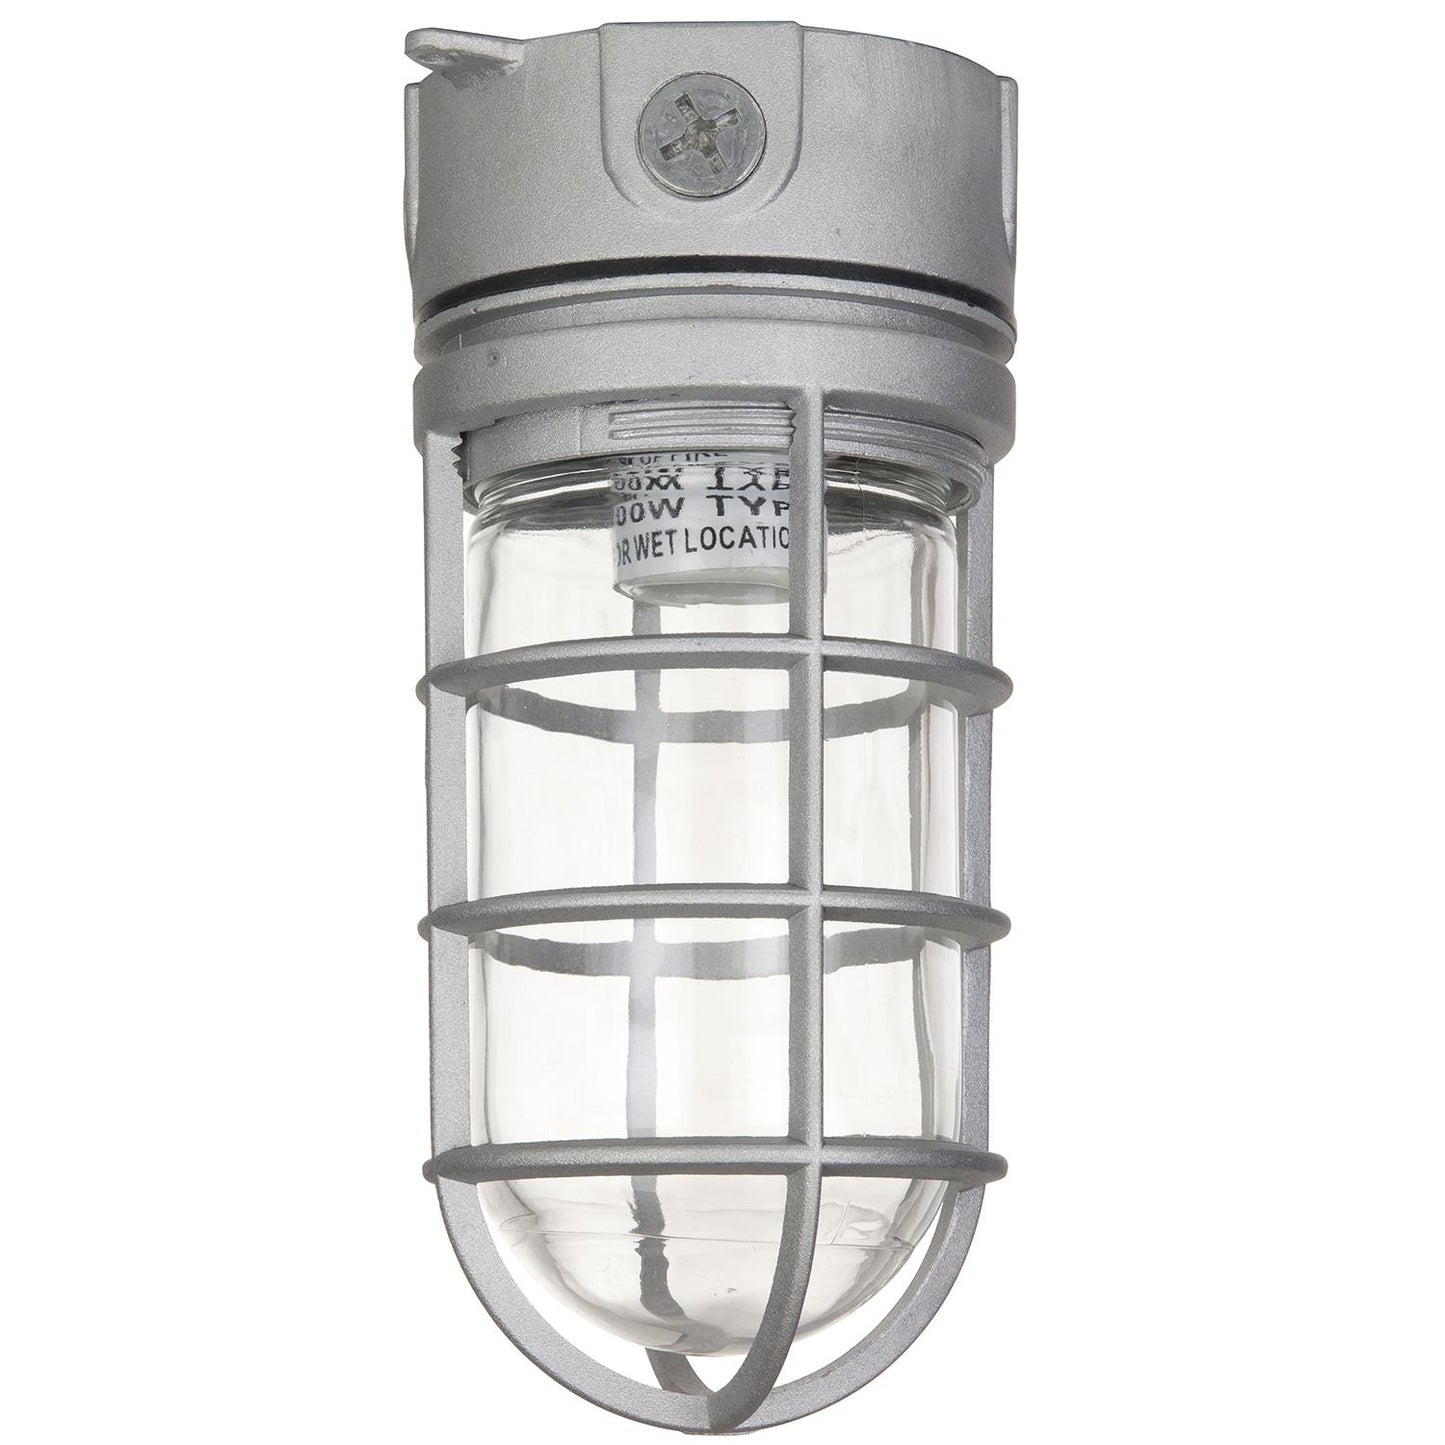 Sunlite 41329-SU Vaporproof Industrial Jar Fixture, Ceiling Mount, Medium Base Socket (E26), 100W Max, 120 Volt, Outdoor, UL Listed, Clear Glass Jar, Metallic Finish